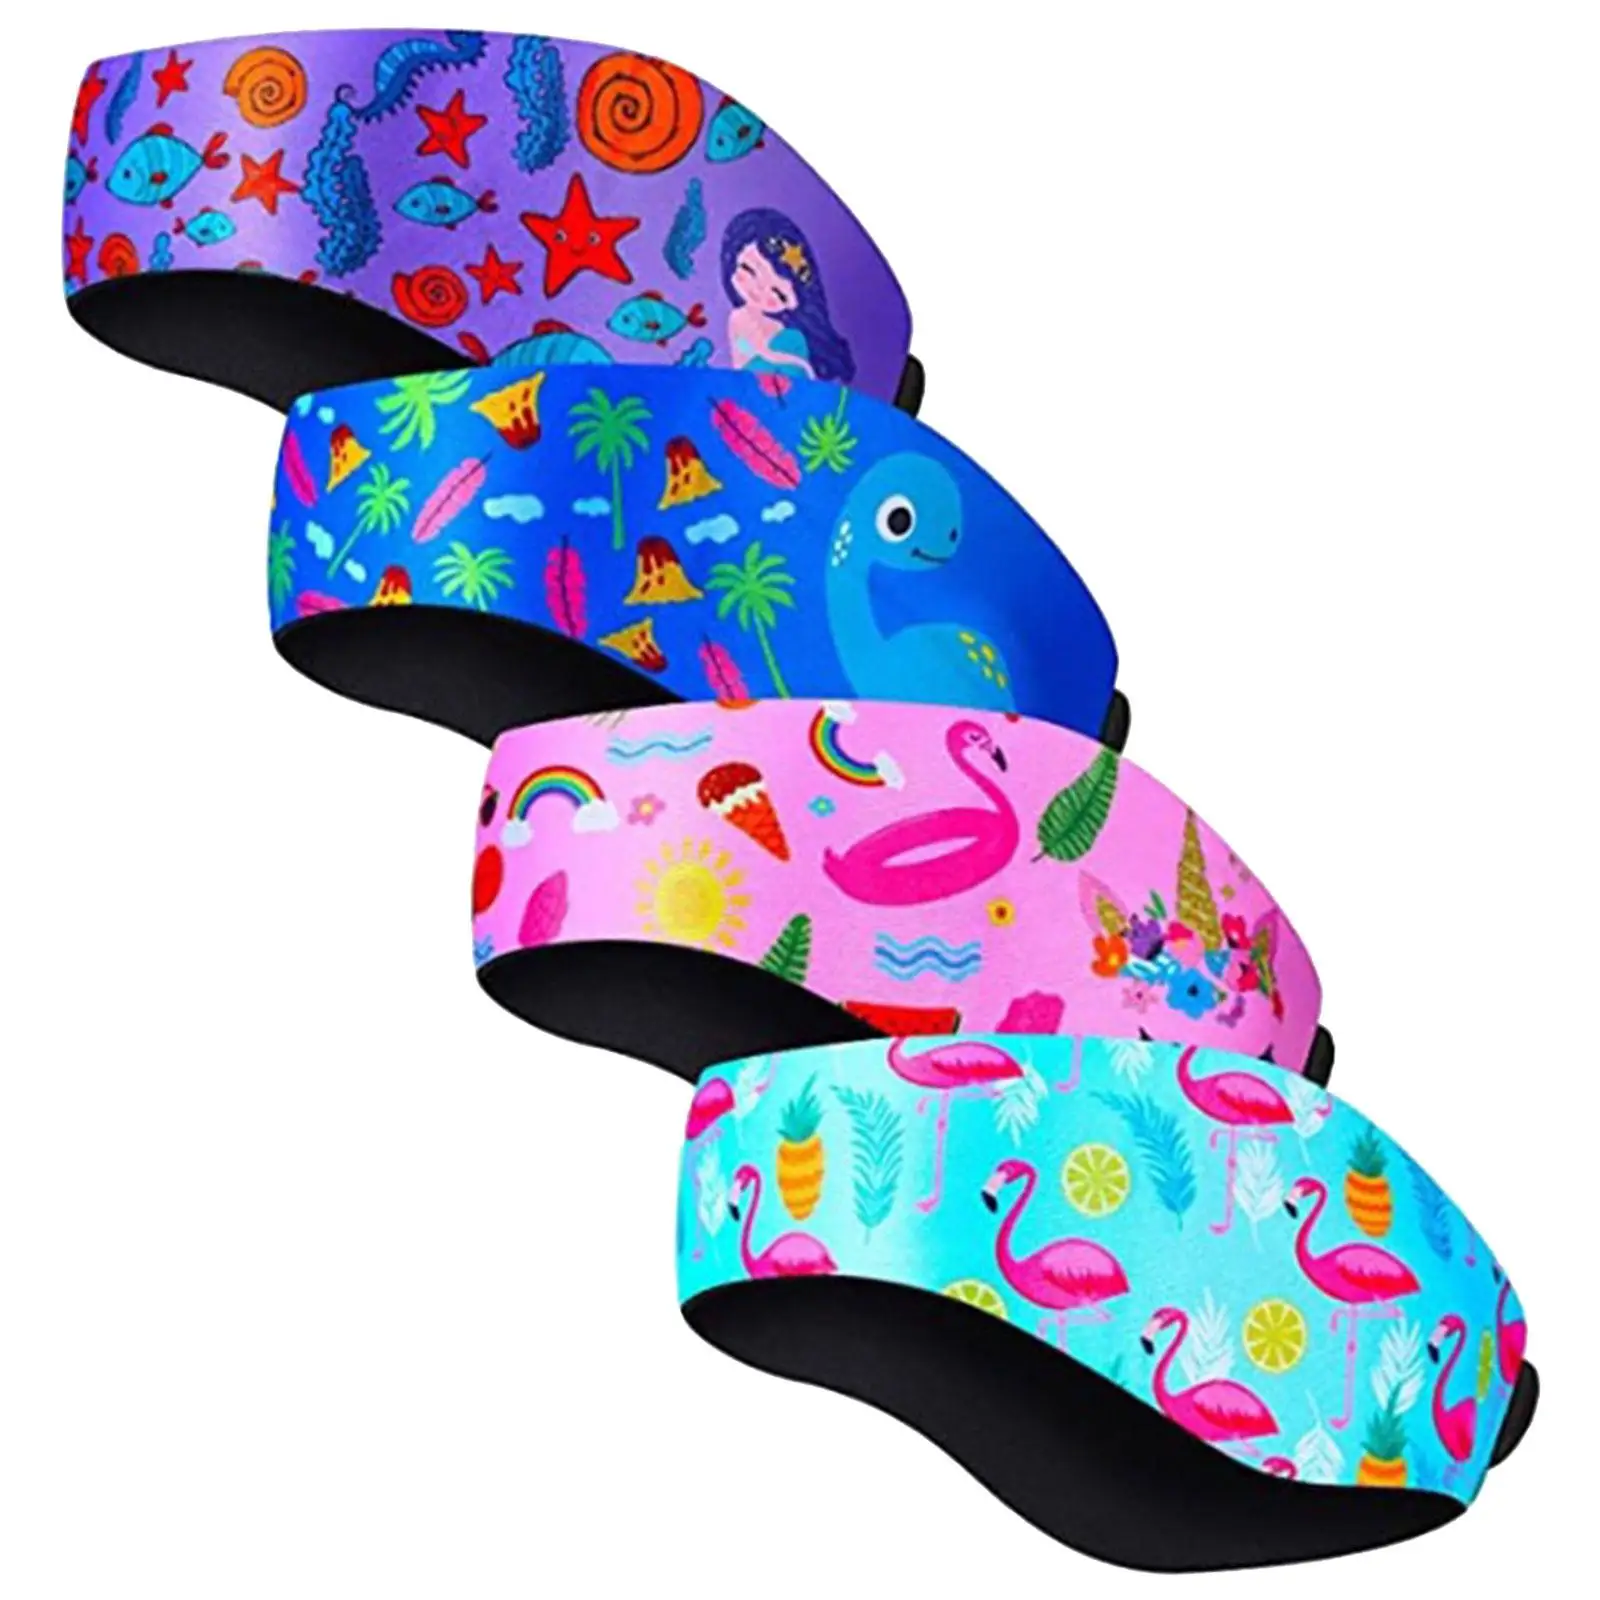 4 Pieces Kids Swimming Headband for Ears Waterproof Portable Comfortable Neoprene Band Swimmer Men Women Paddling Showering